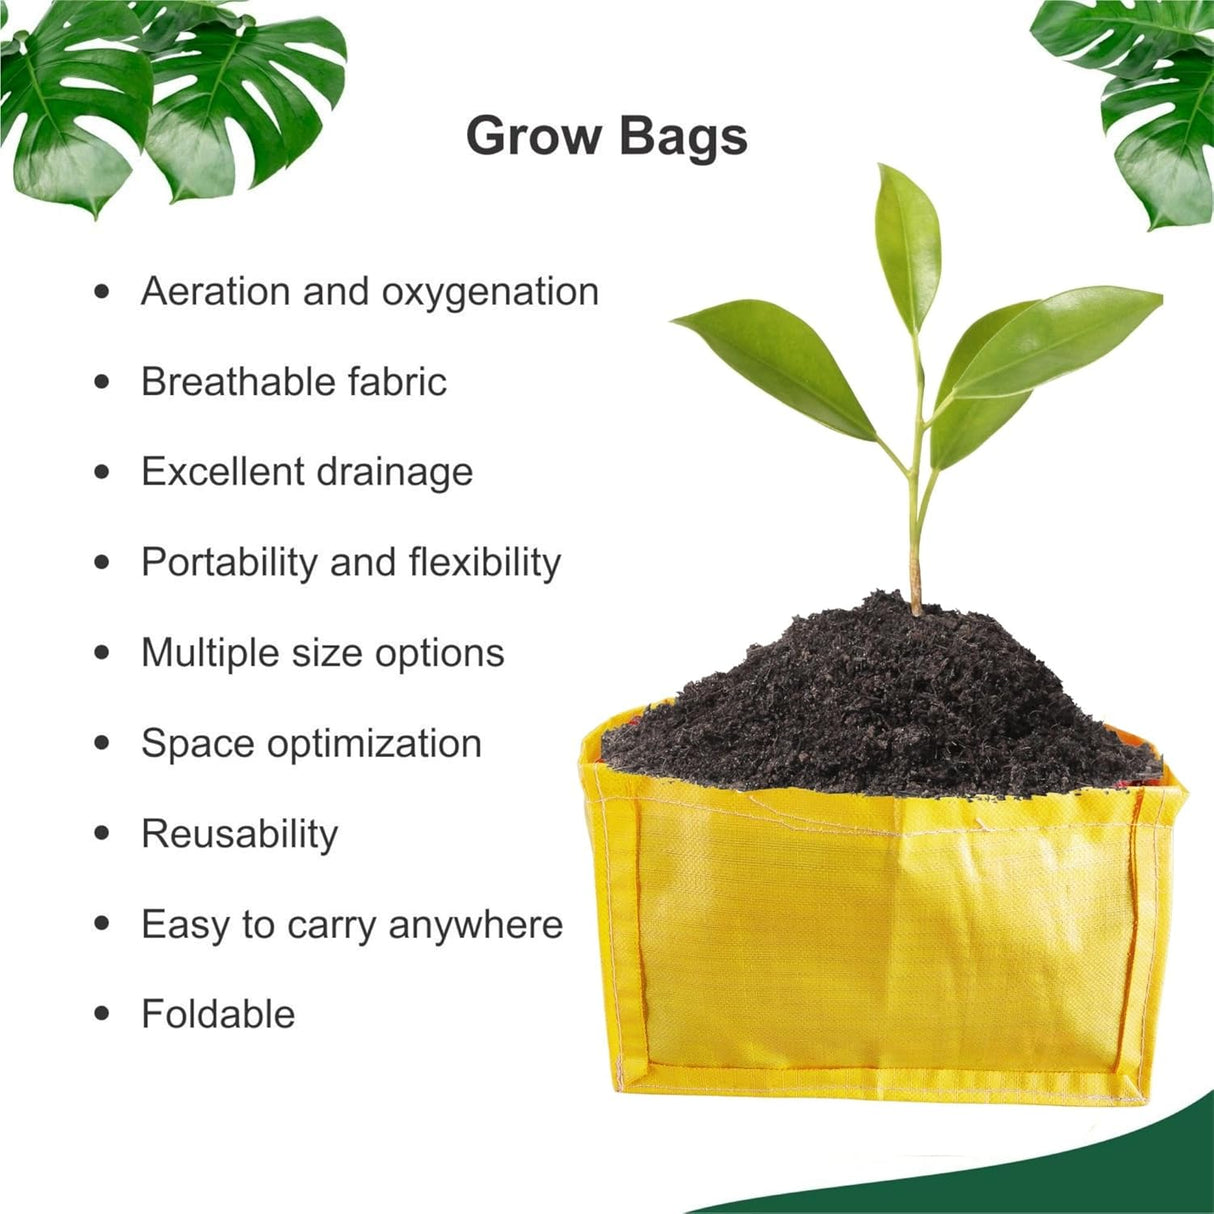 SINGHAL Terrace Garden Yellow Grow Bag Rectangle 18x12x12 inch (Rectangular Pack of 3)